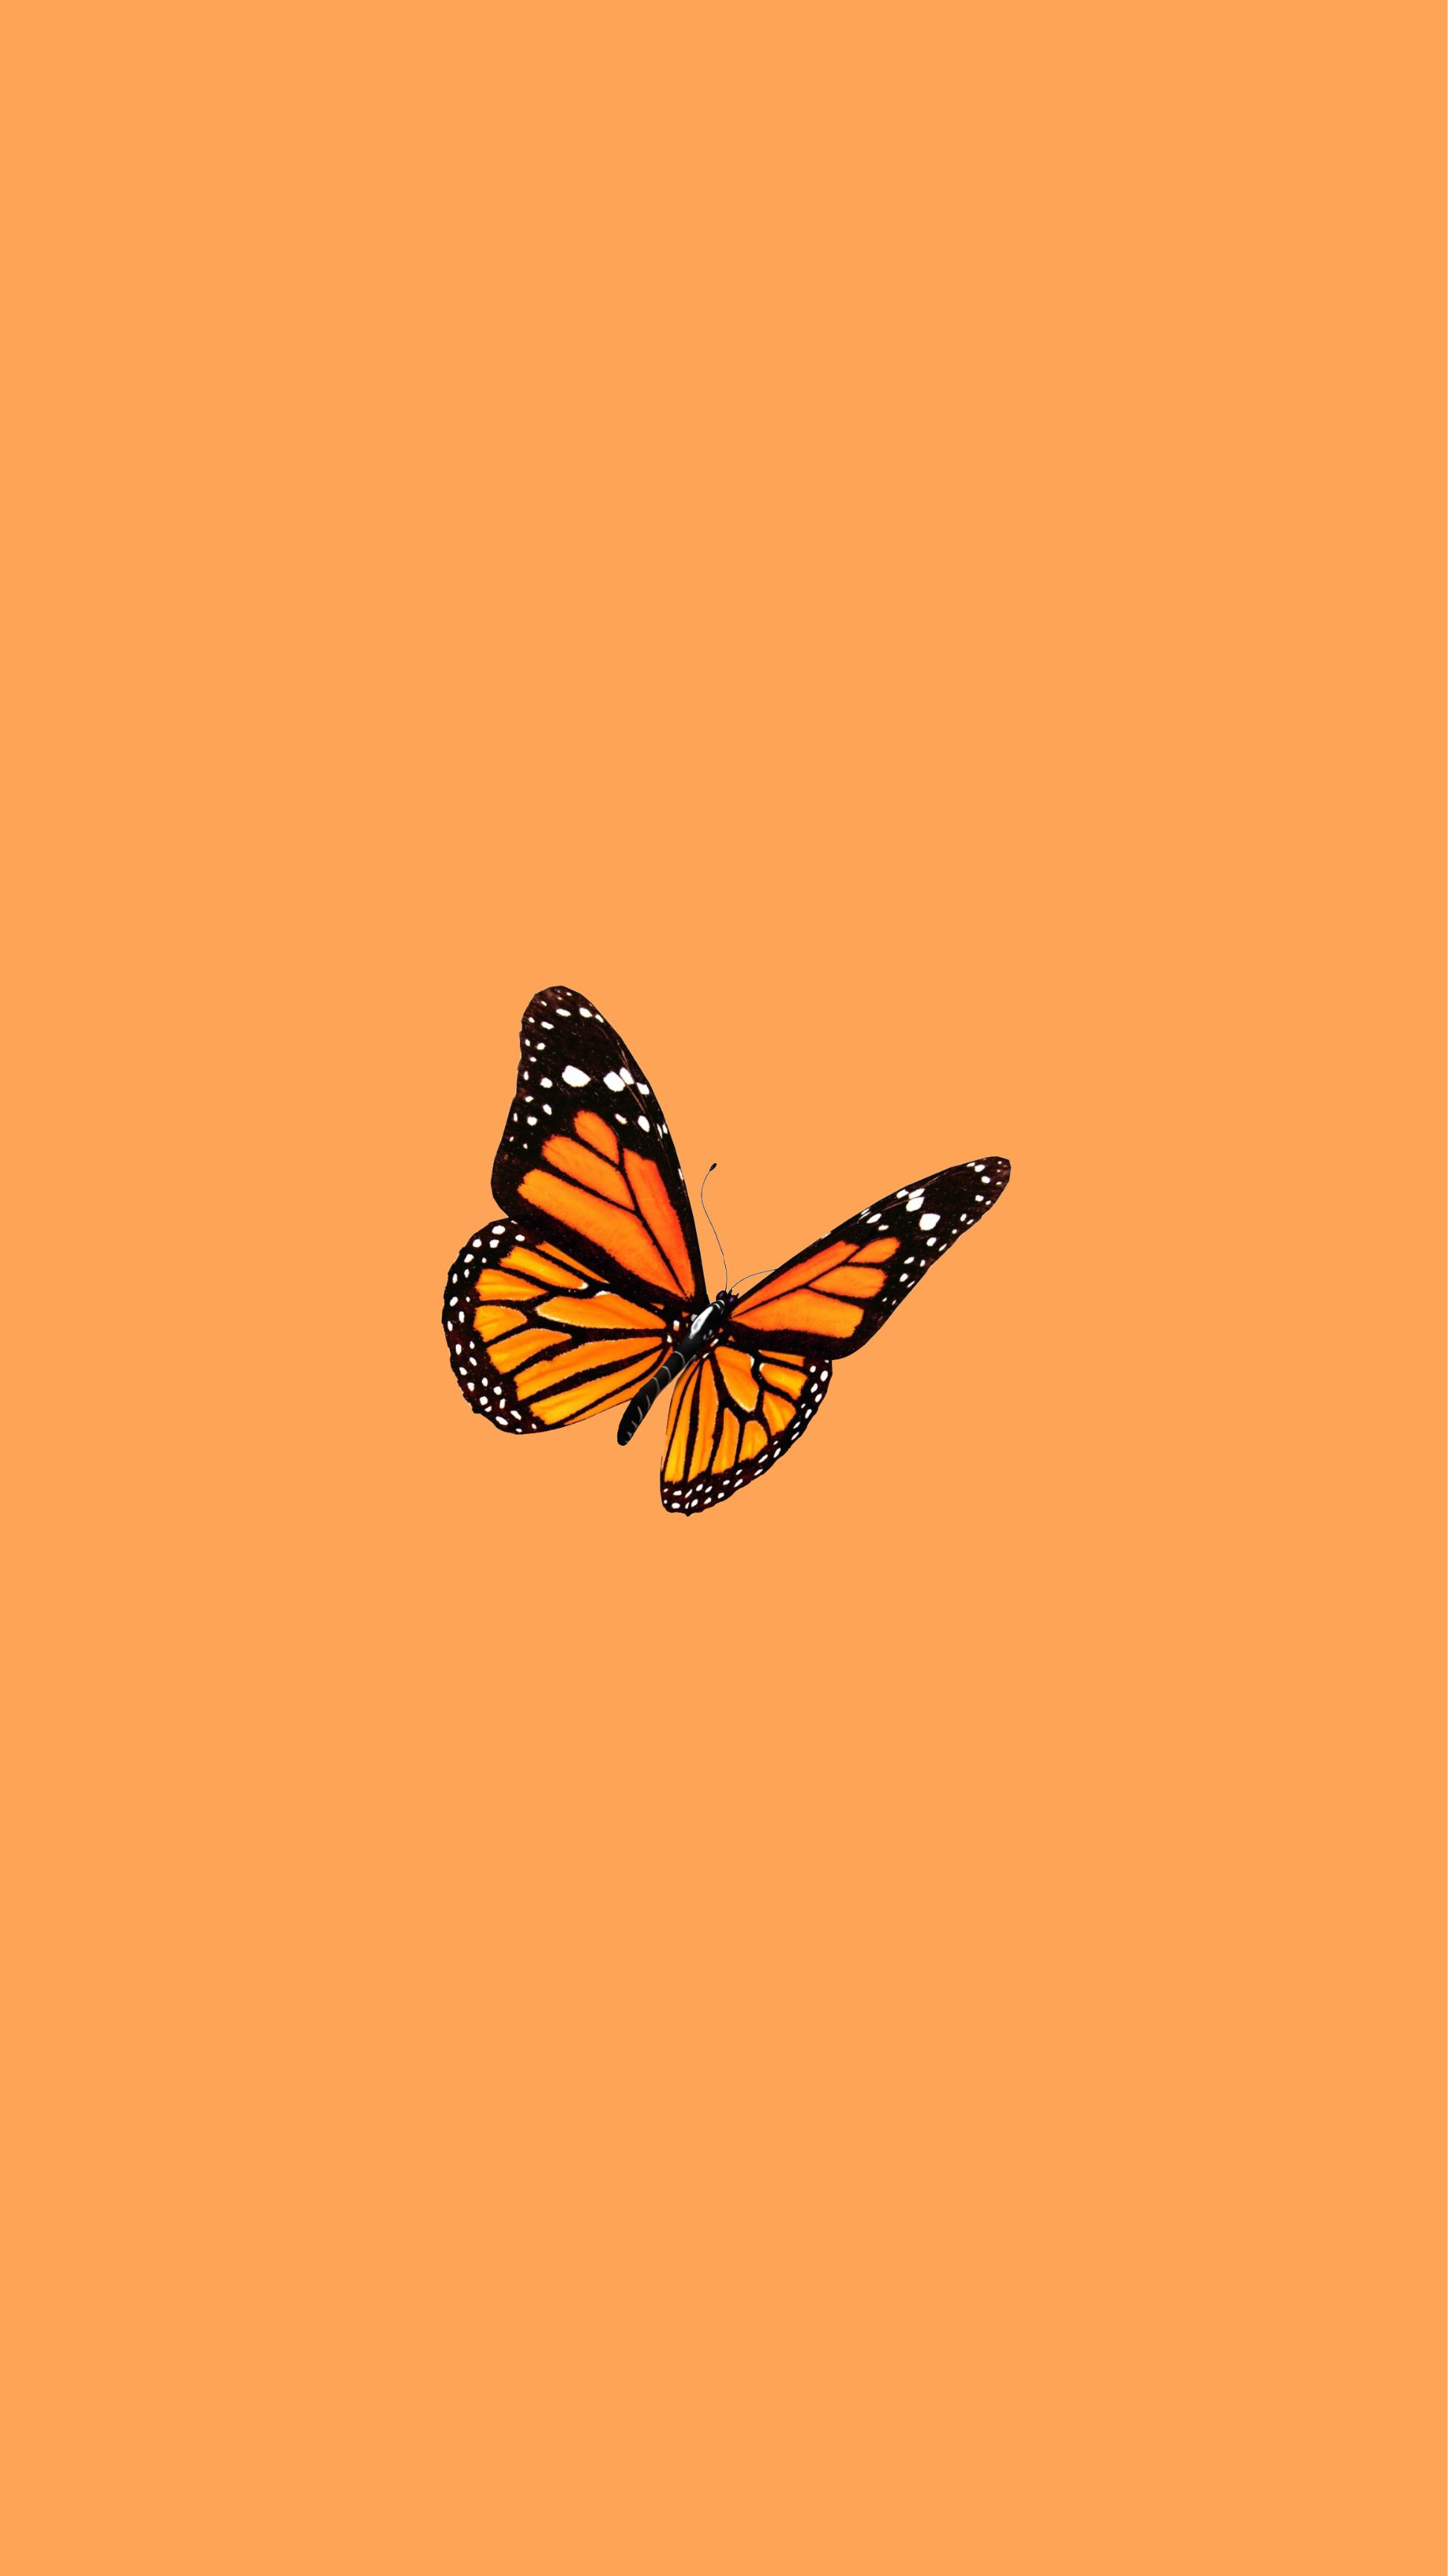 butterfly wallpaper. Butterfly wallpaper iphone, Butterfly wallpaper, Orange wallpaper